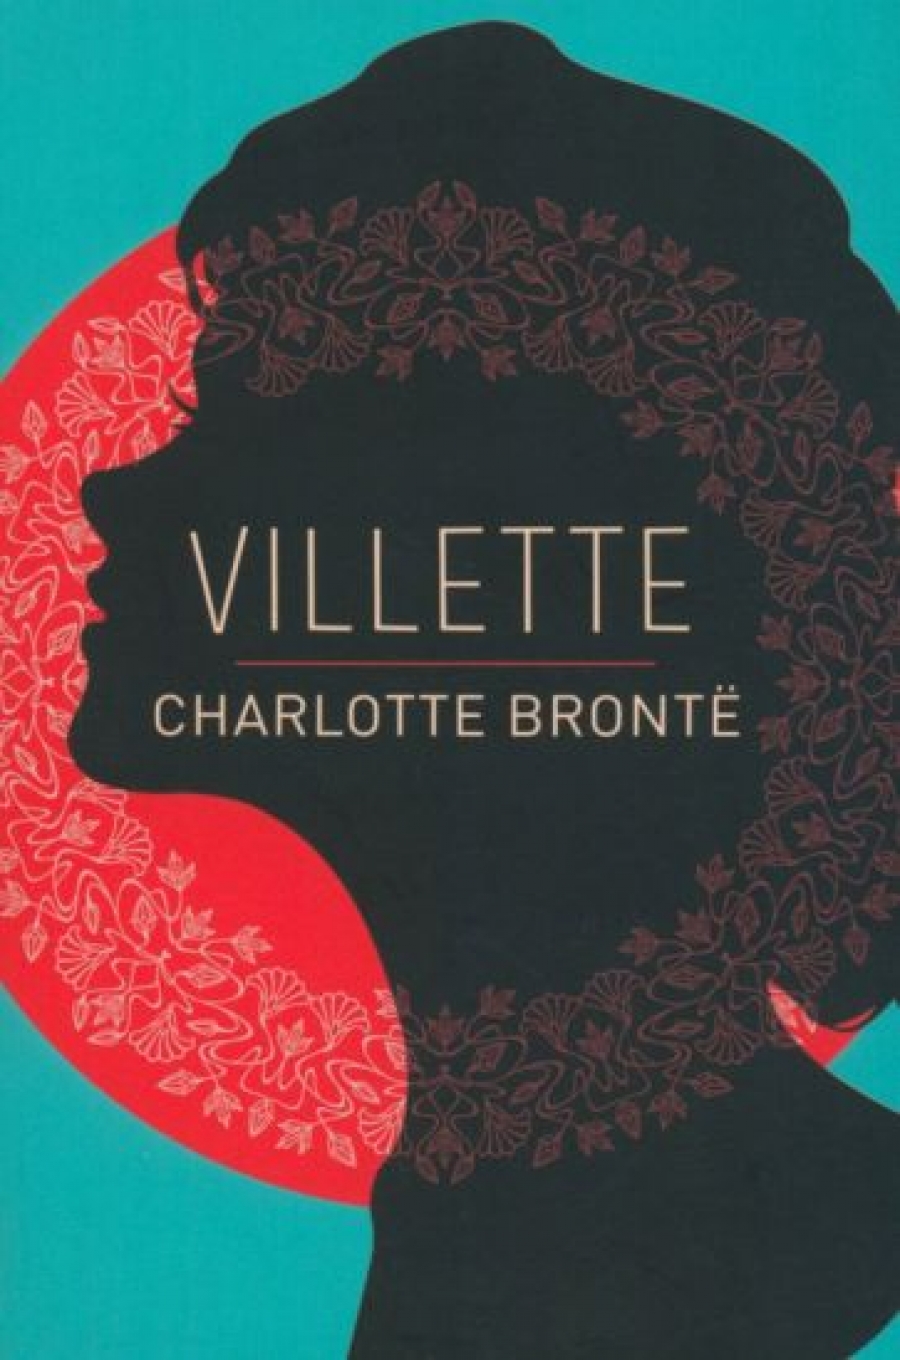 Bronte Charlotte Villette 